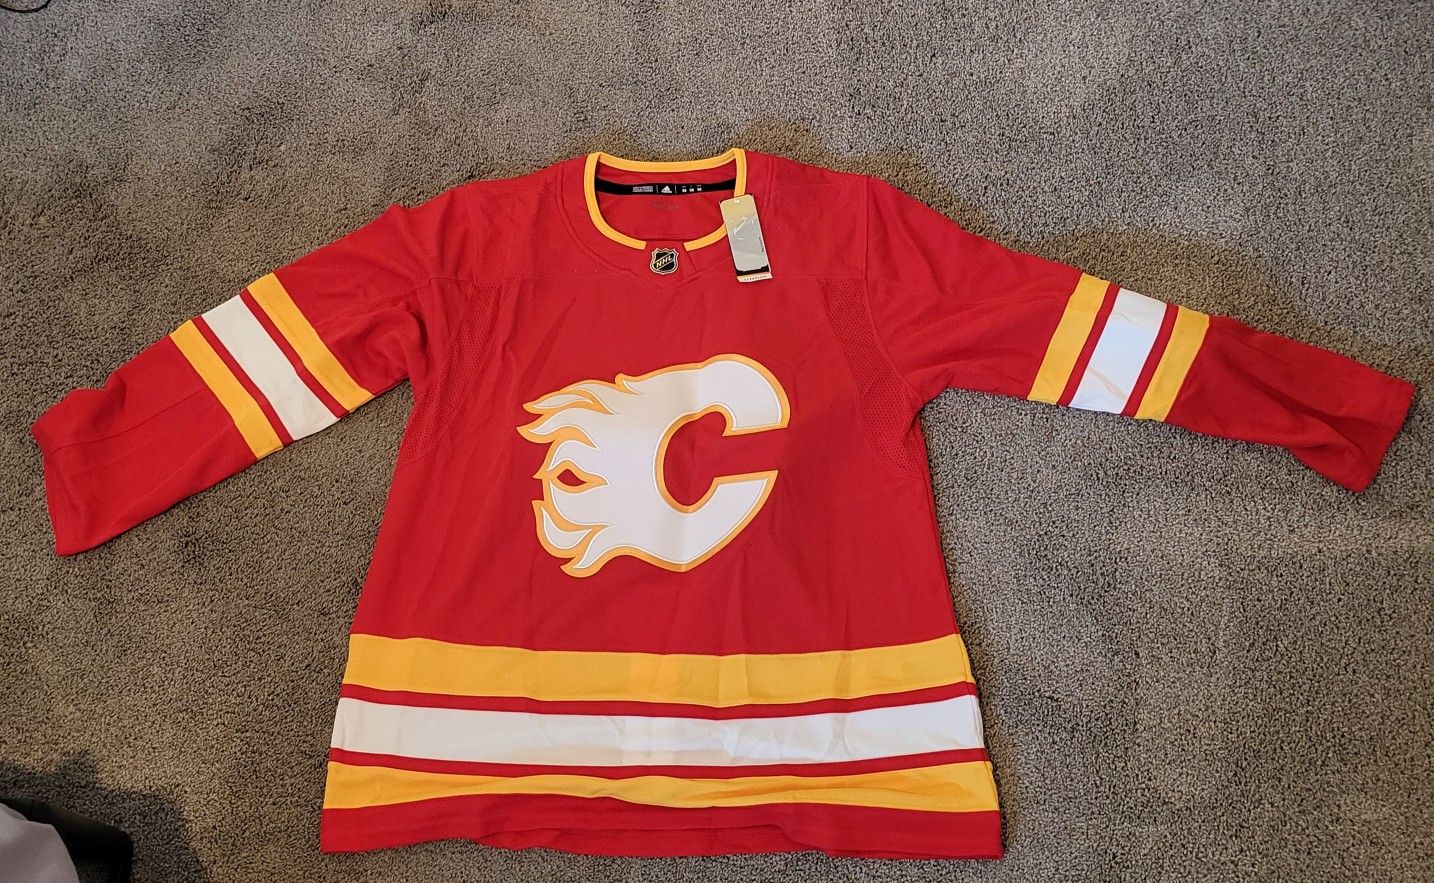 Adidas Calgary Flames Jersey